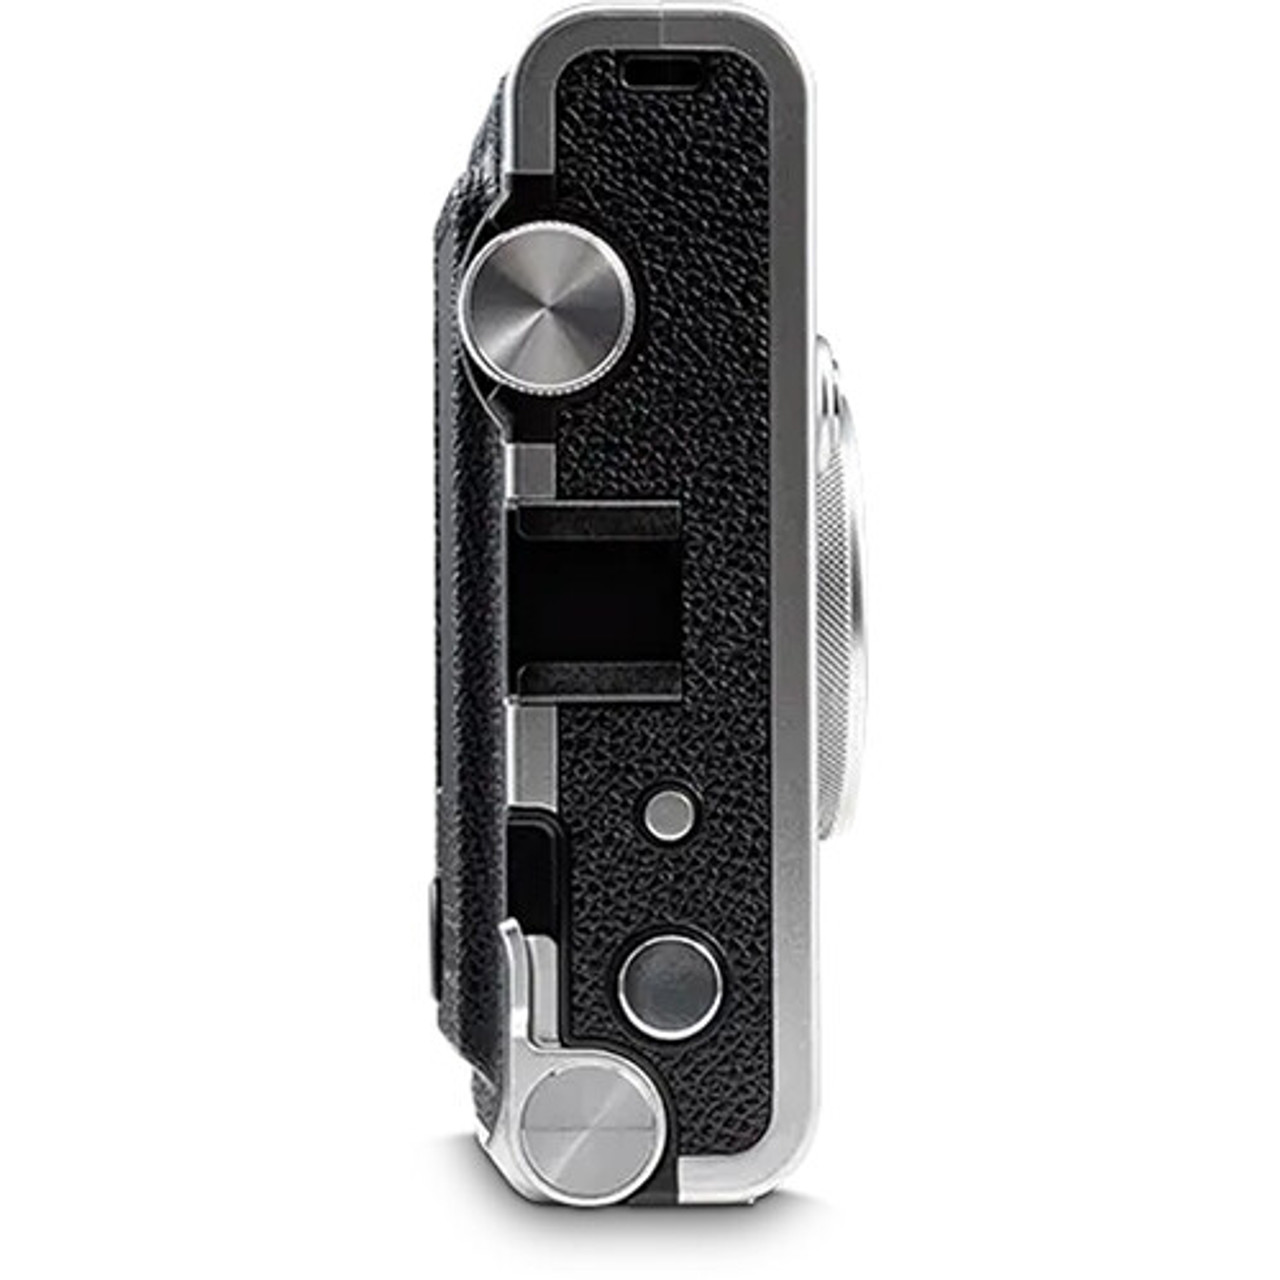 Fujifilm Instax Mini Evo Hybrid Instant Film Camera